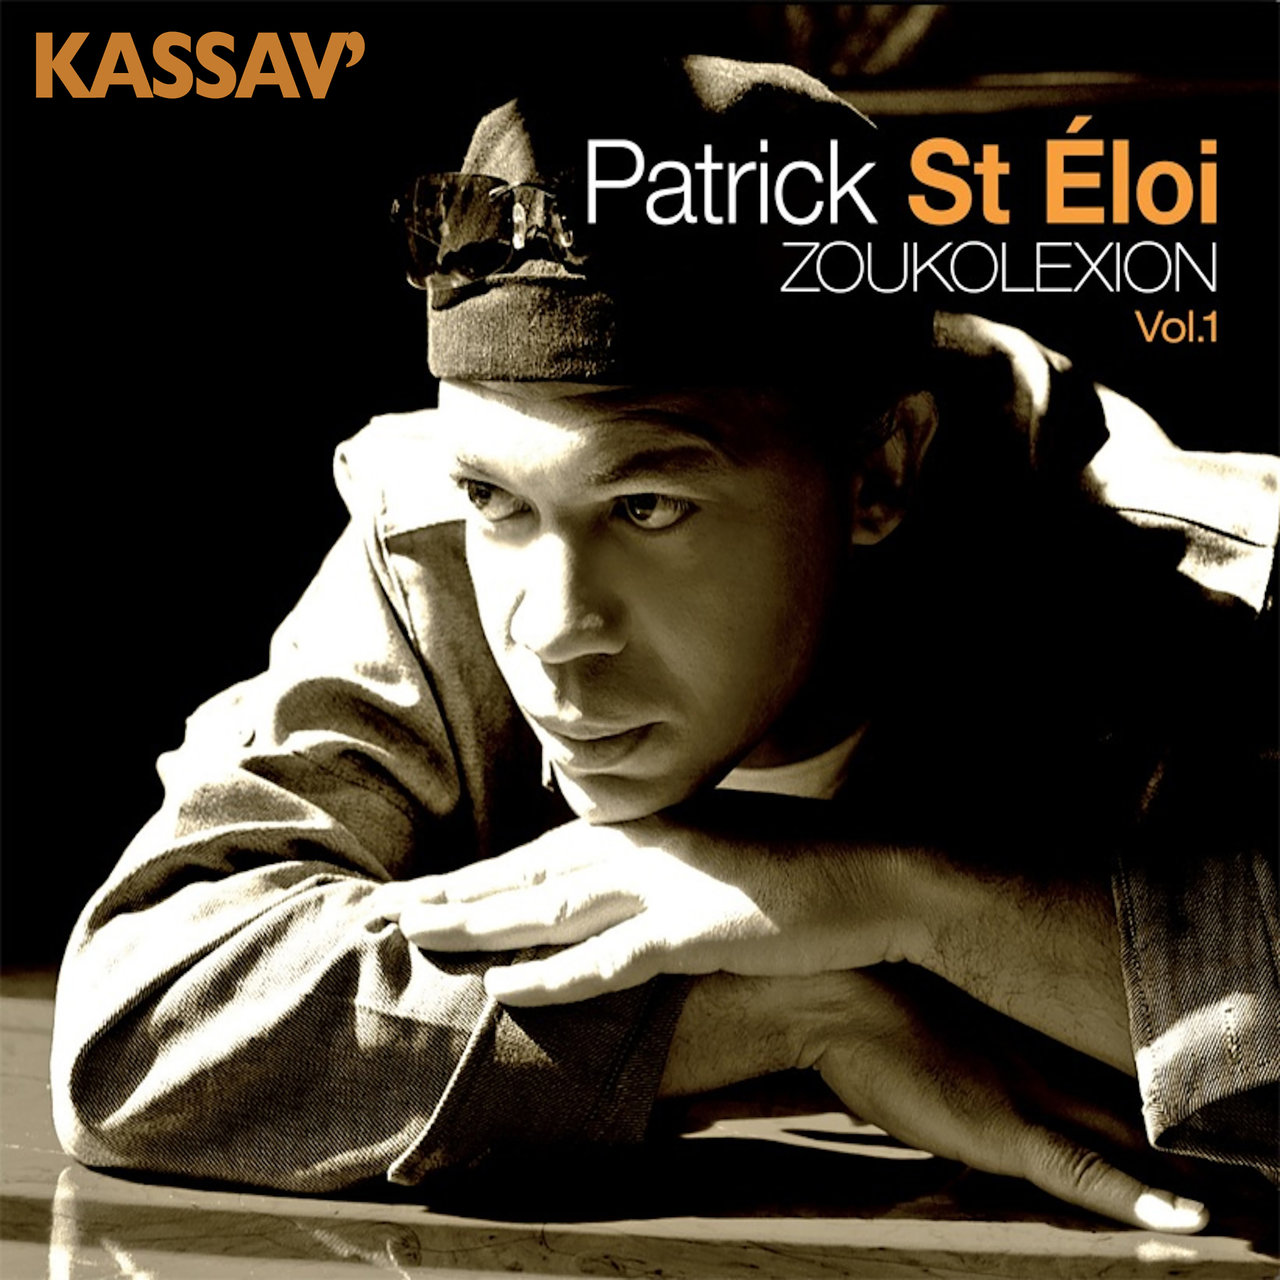 Patrick Saint-Eloi - Zoukolexion Vol. 1 (Cover)